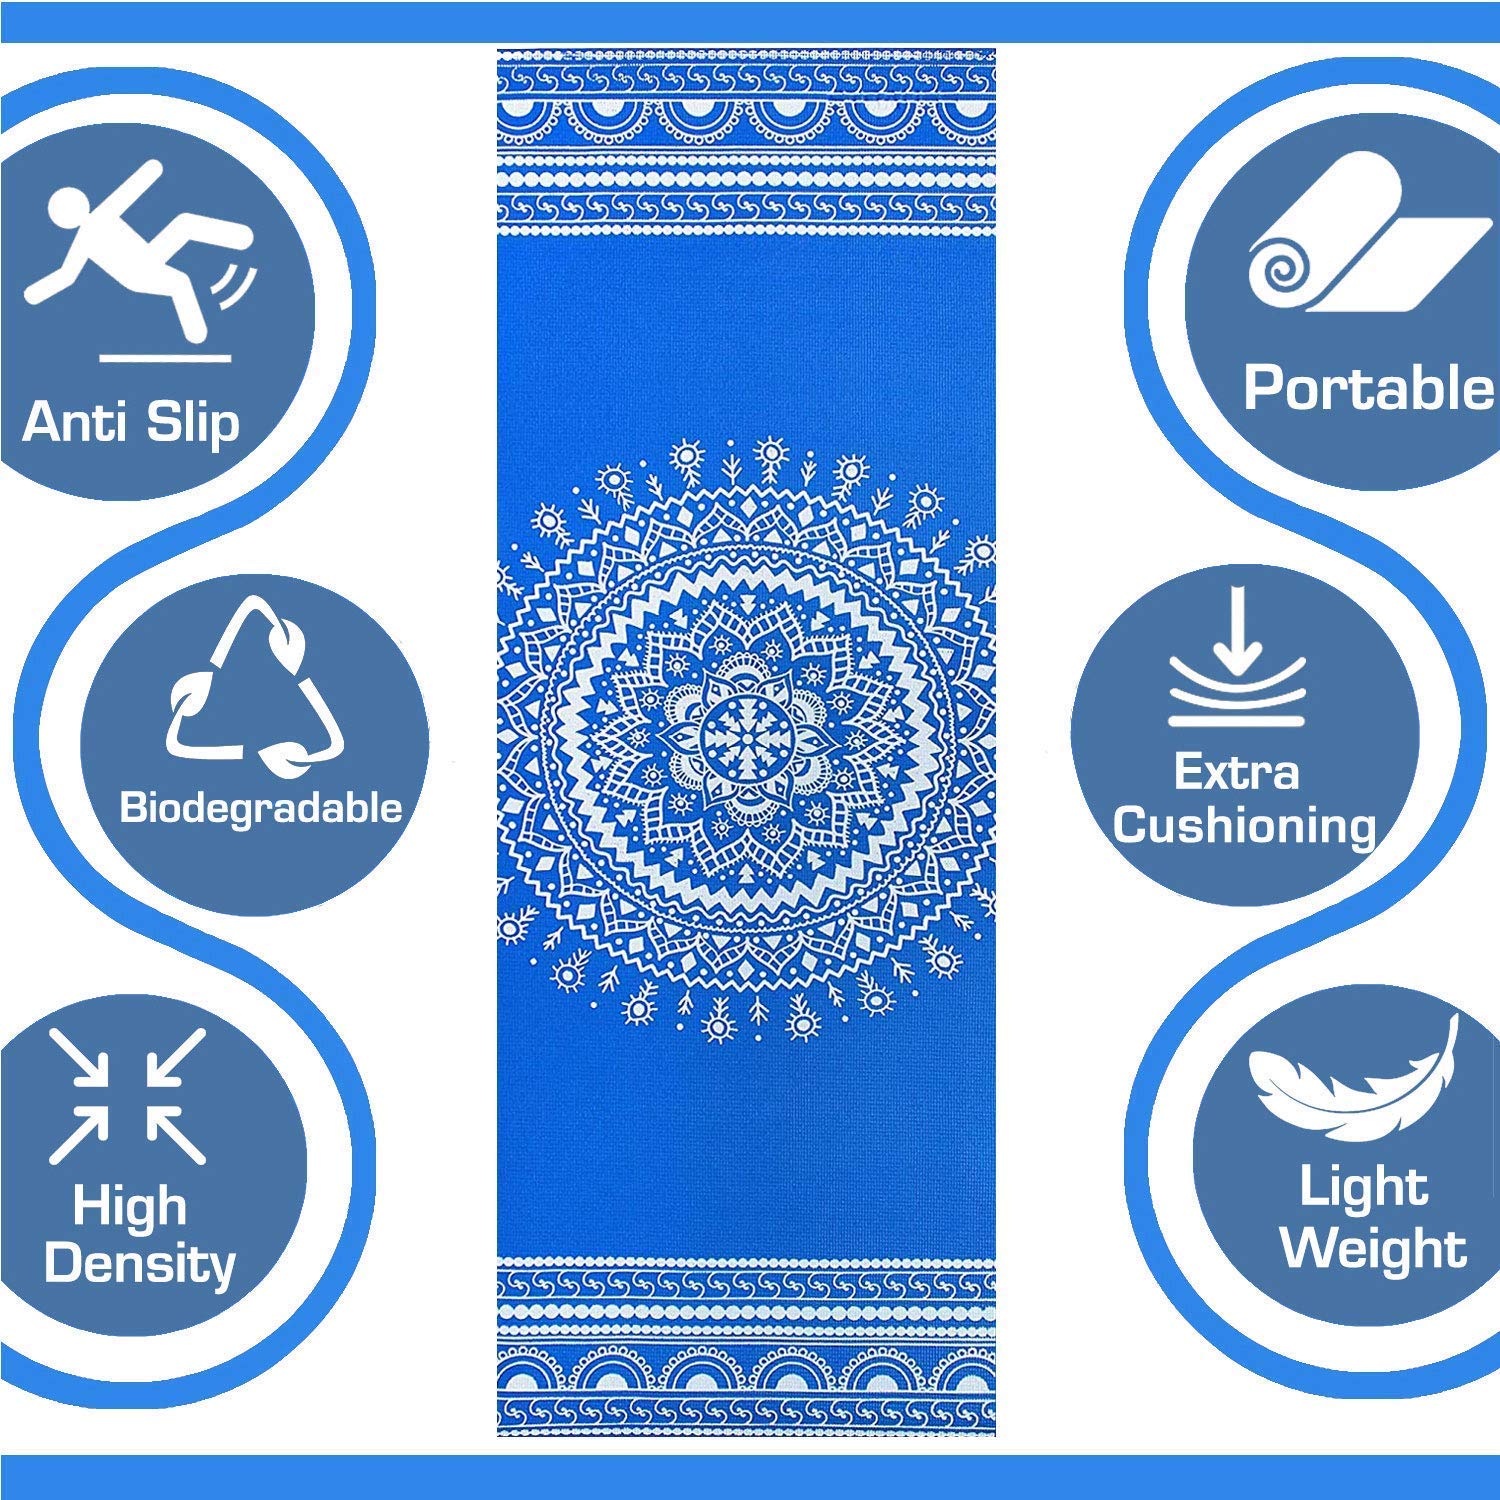 Strauss Meditation Designer Yoga Mat 5 mm (Navy Blue), Yoga Block (Navy Blue) Pair, Anti-Slip Yoga Towel (Blue) and Yoga Belt (Blue)